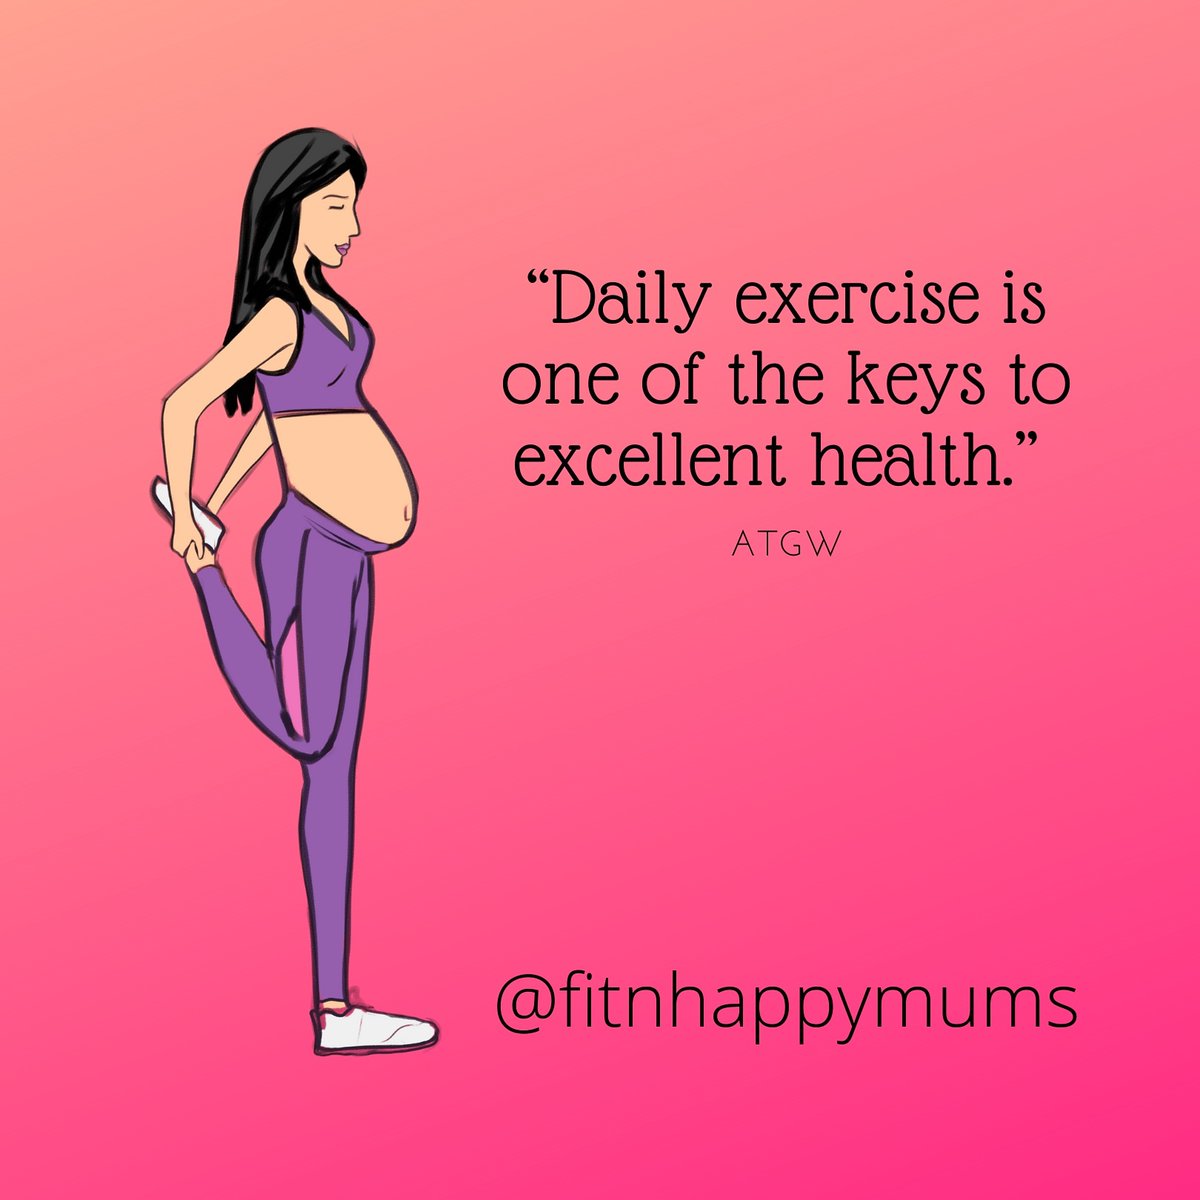 Take care of your health, mommies!
#uaemoms #abudhabimoms #selfcare #fitnessmom #yoga #dubaimoms #dubai #dubaimums #momsindubai #uaemums #yogaabudhabi #abudhabimums #fitmums #fitmoms #fitnhappymums #pregnantuae #abudhabi #yogauae #fitnessmoms #prenatal #prenatalfitness